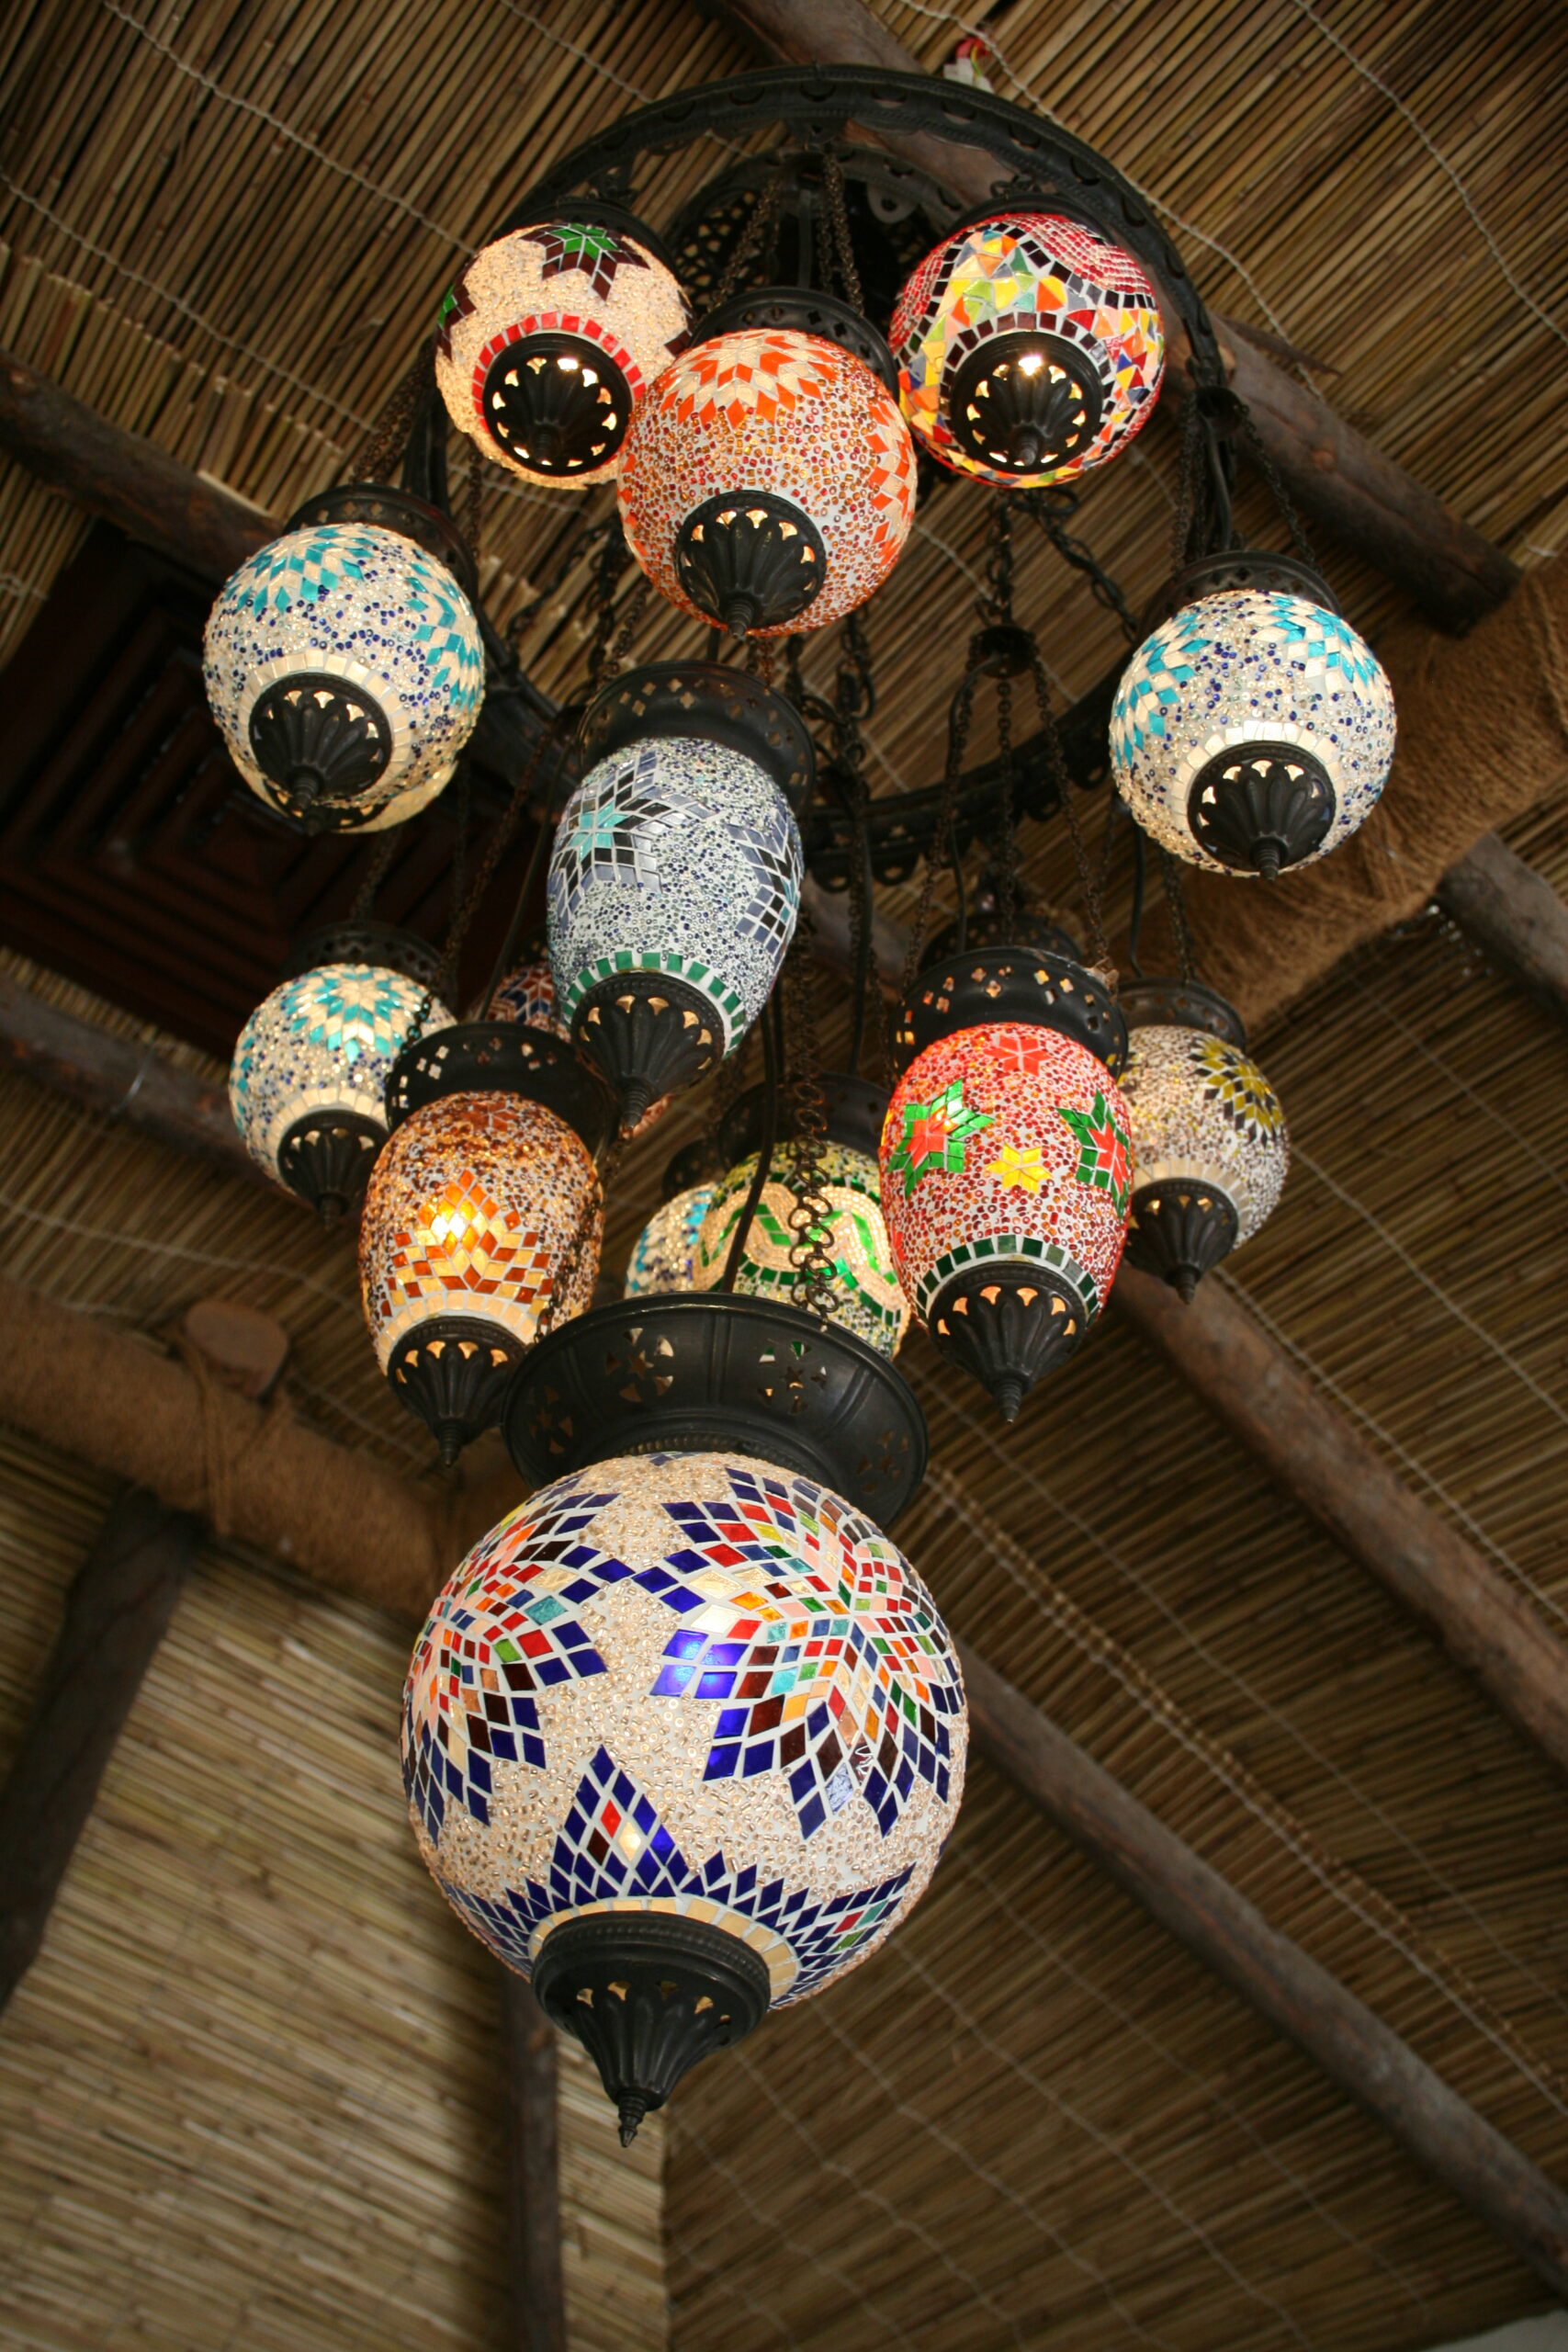 Orientalische Lampe